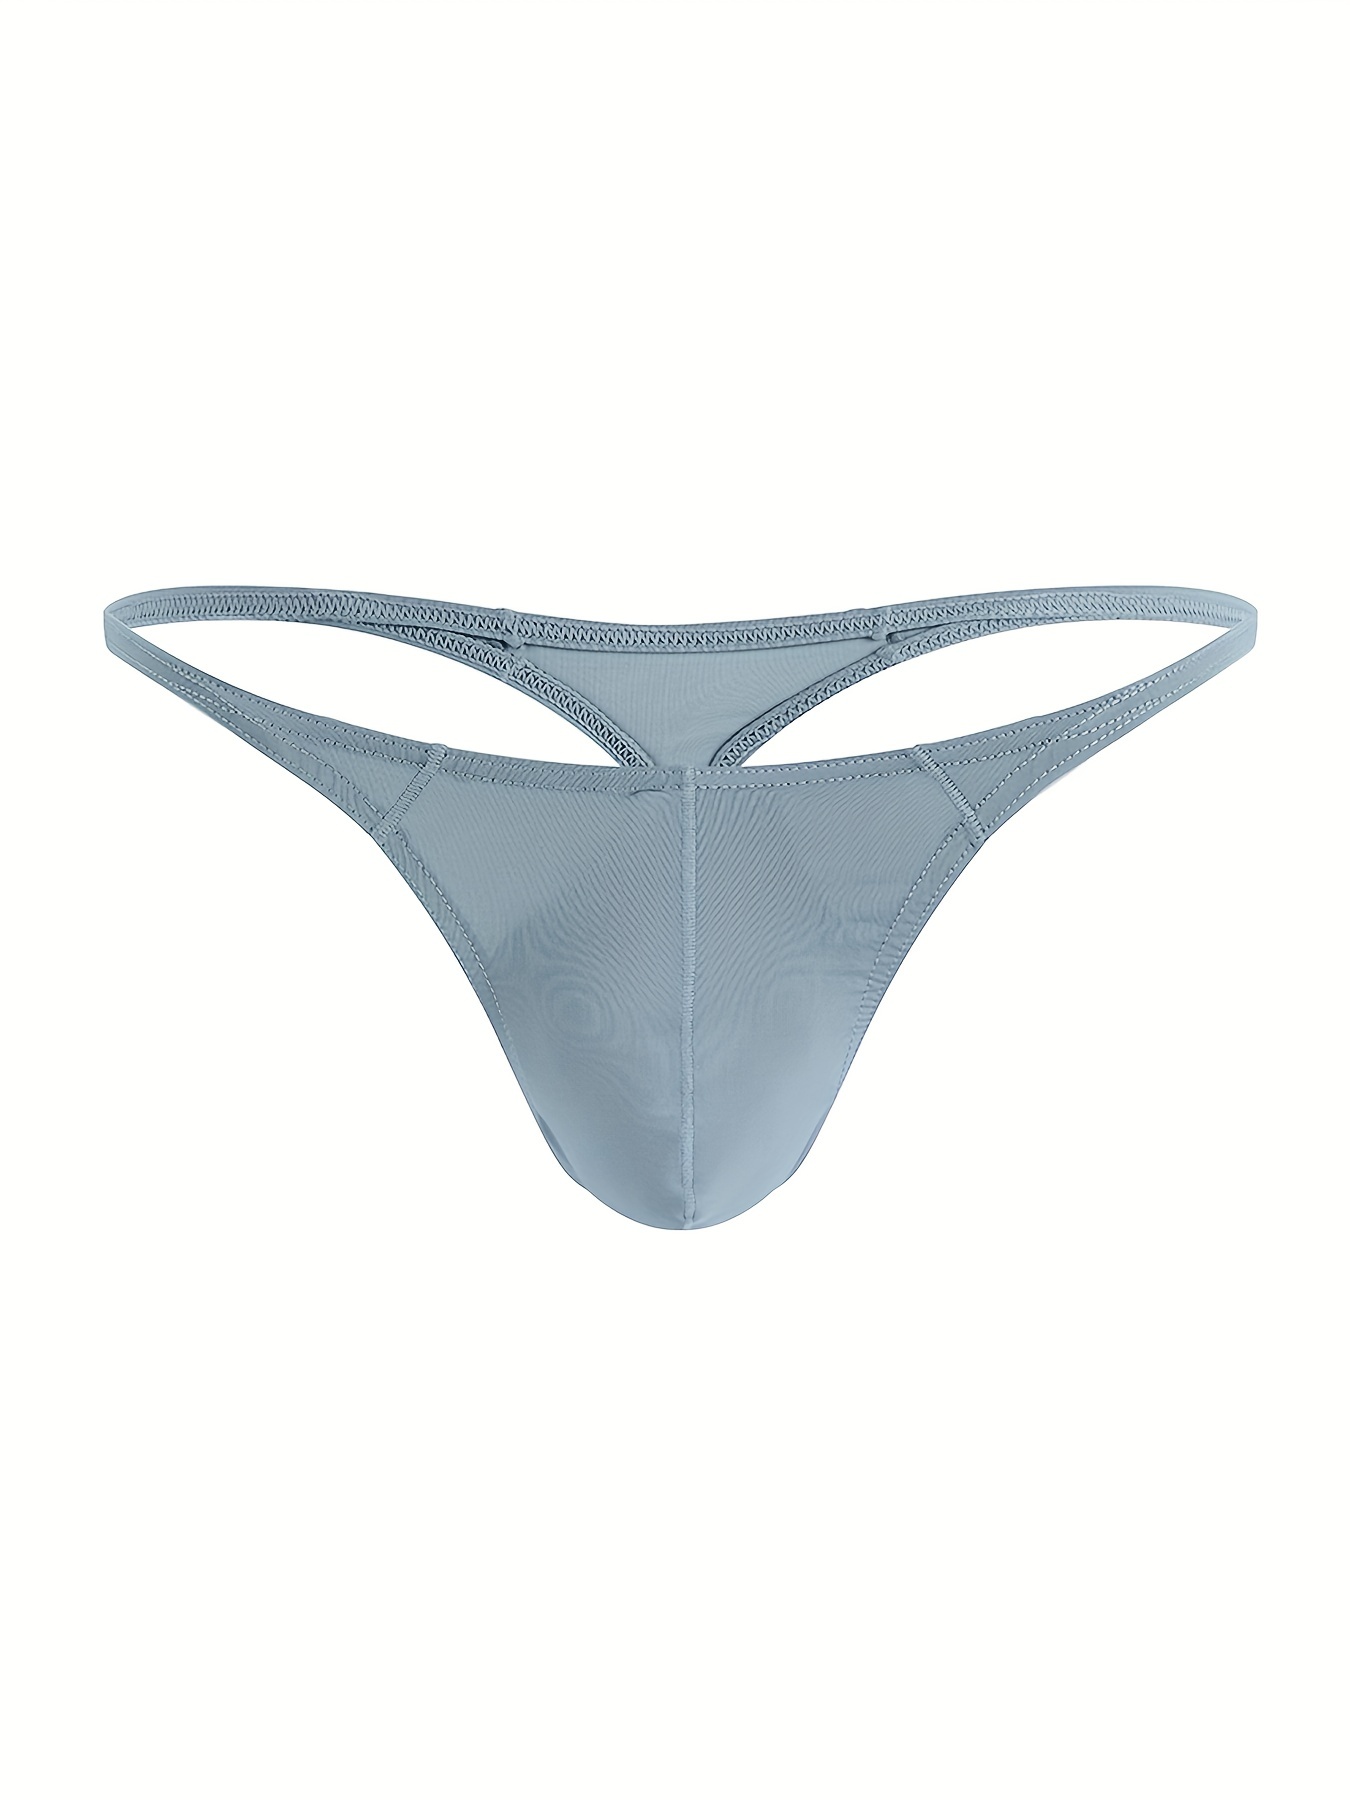 Thong For Women G-string Bikini Thong Low Waist Panties